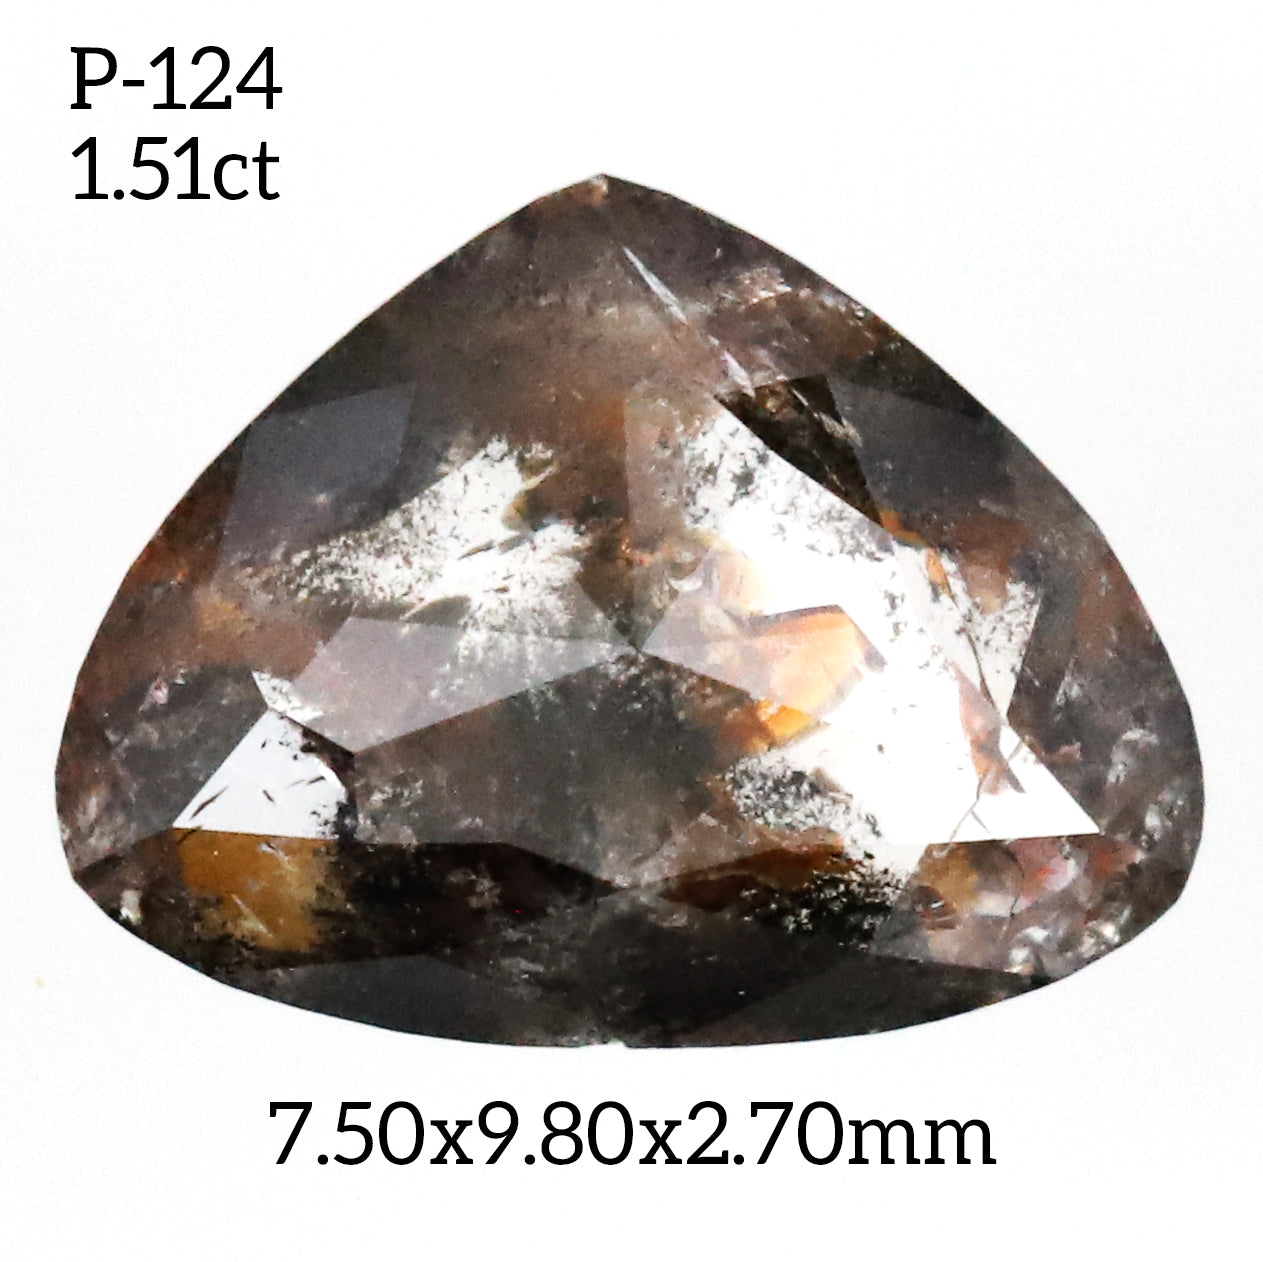 P124 - Salt and pepper pear diamond